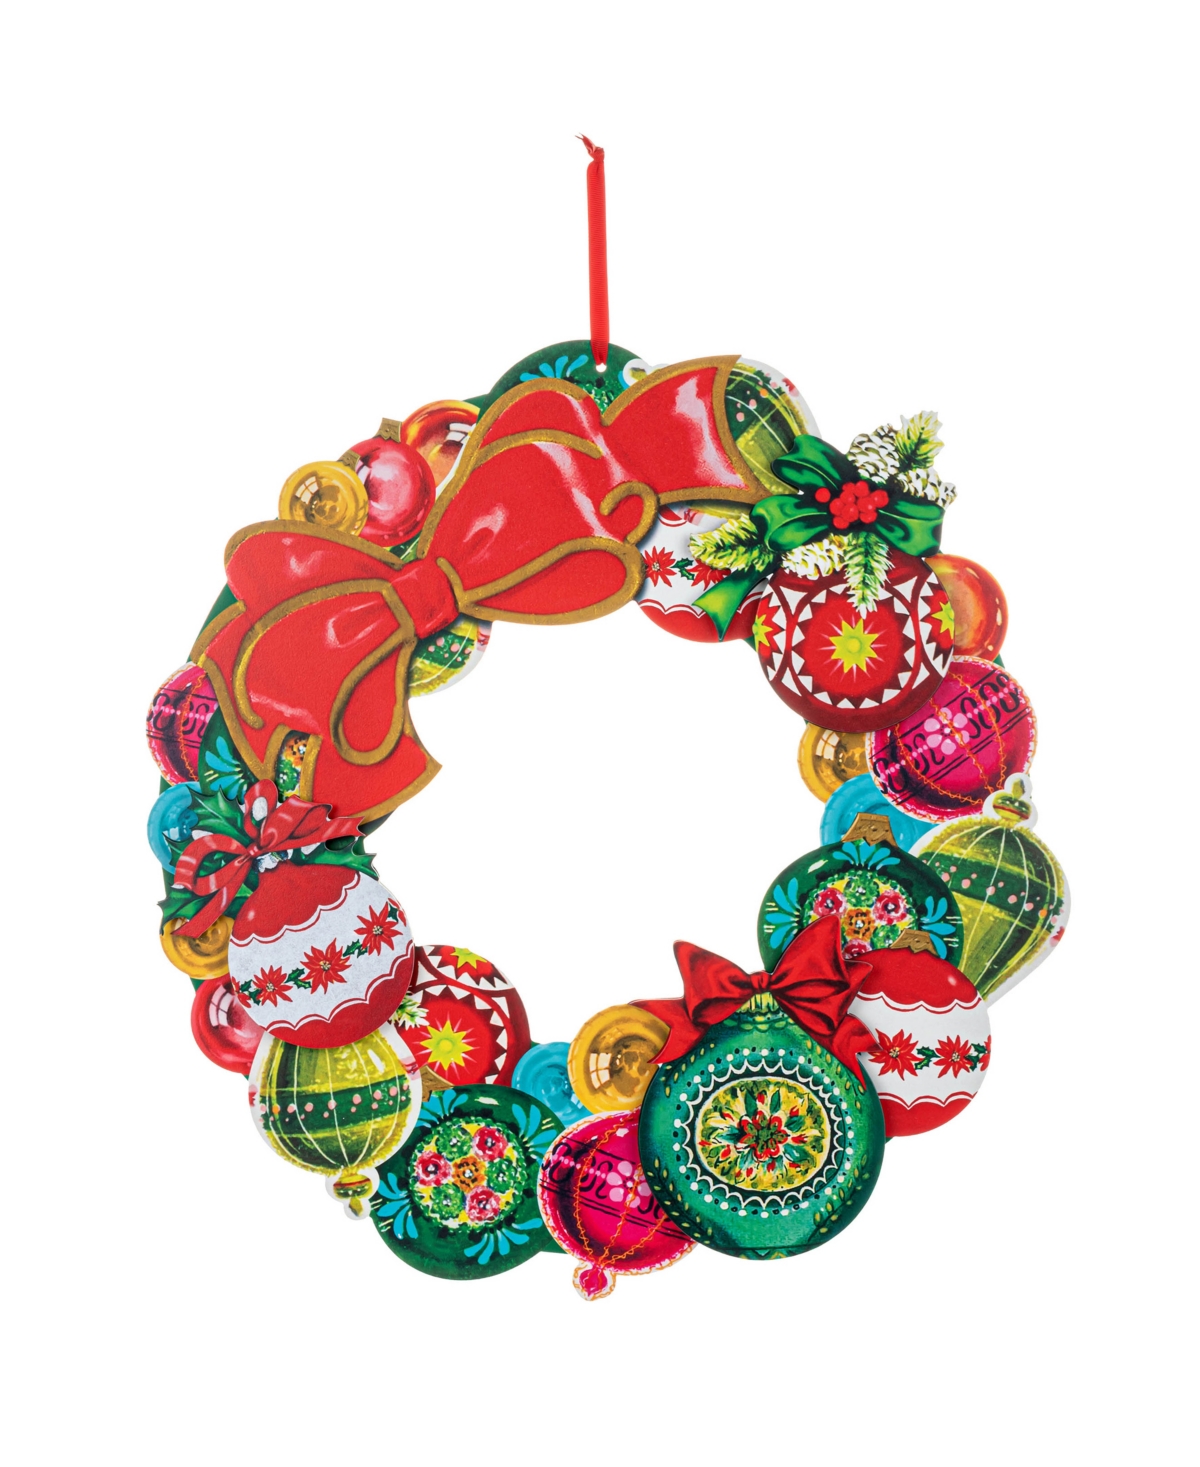 Mr. Christmas 19" Wooden Wreath Vintage-like Ornament In Multi